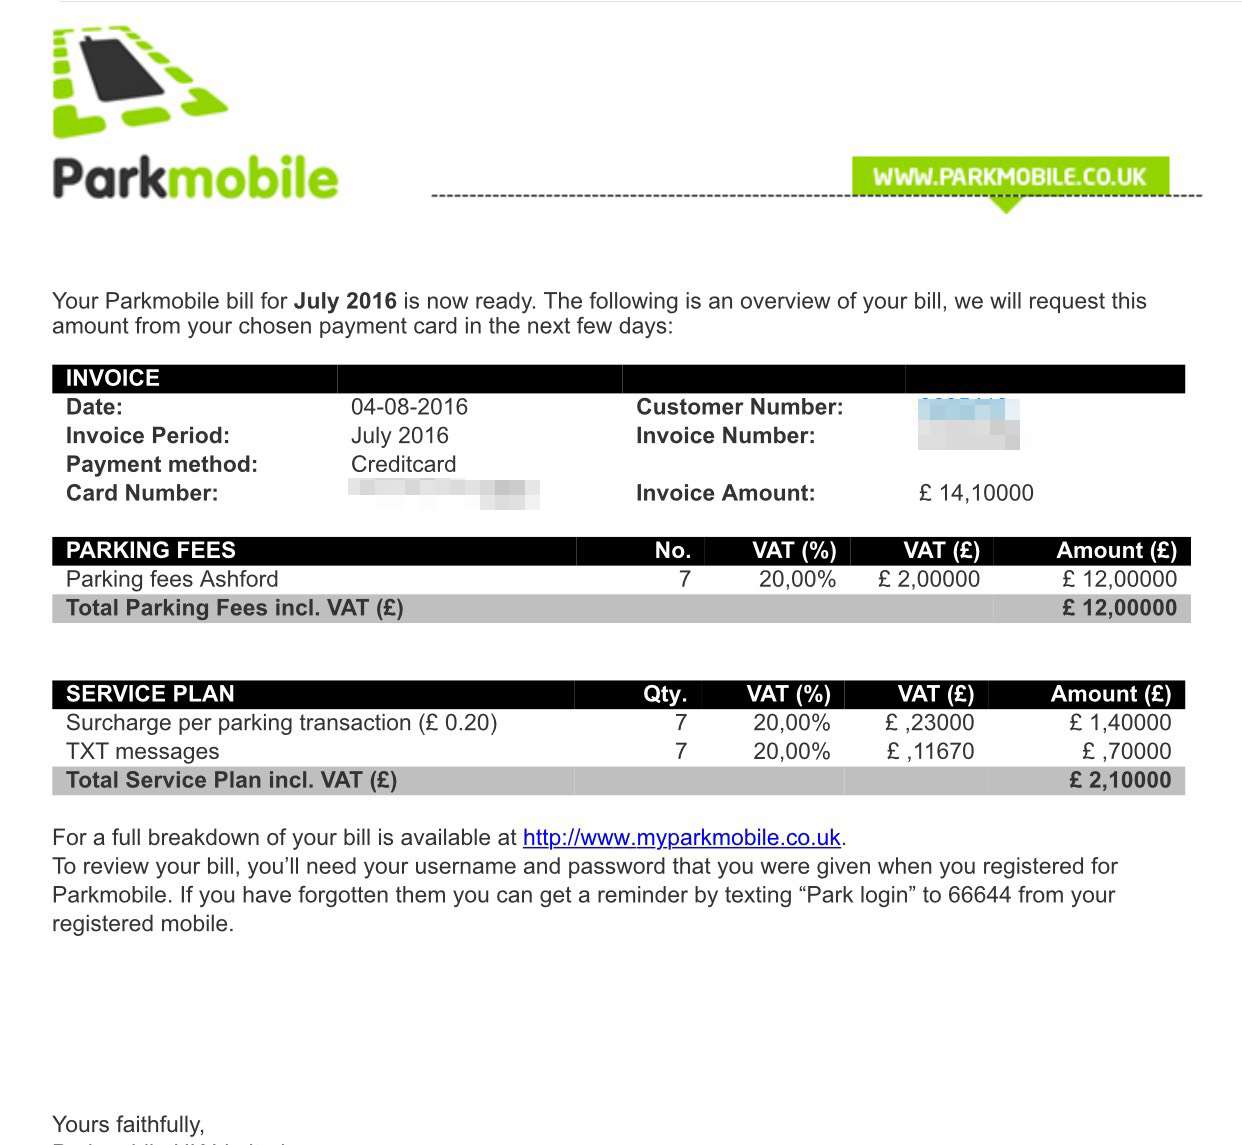 The Parkmobile invoice